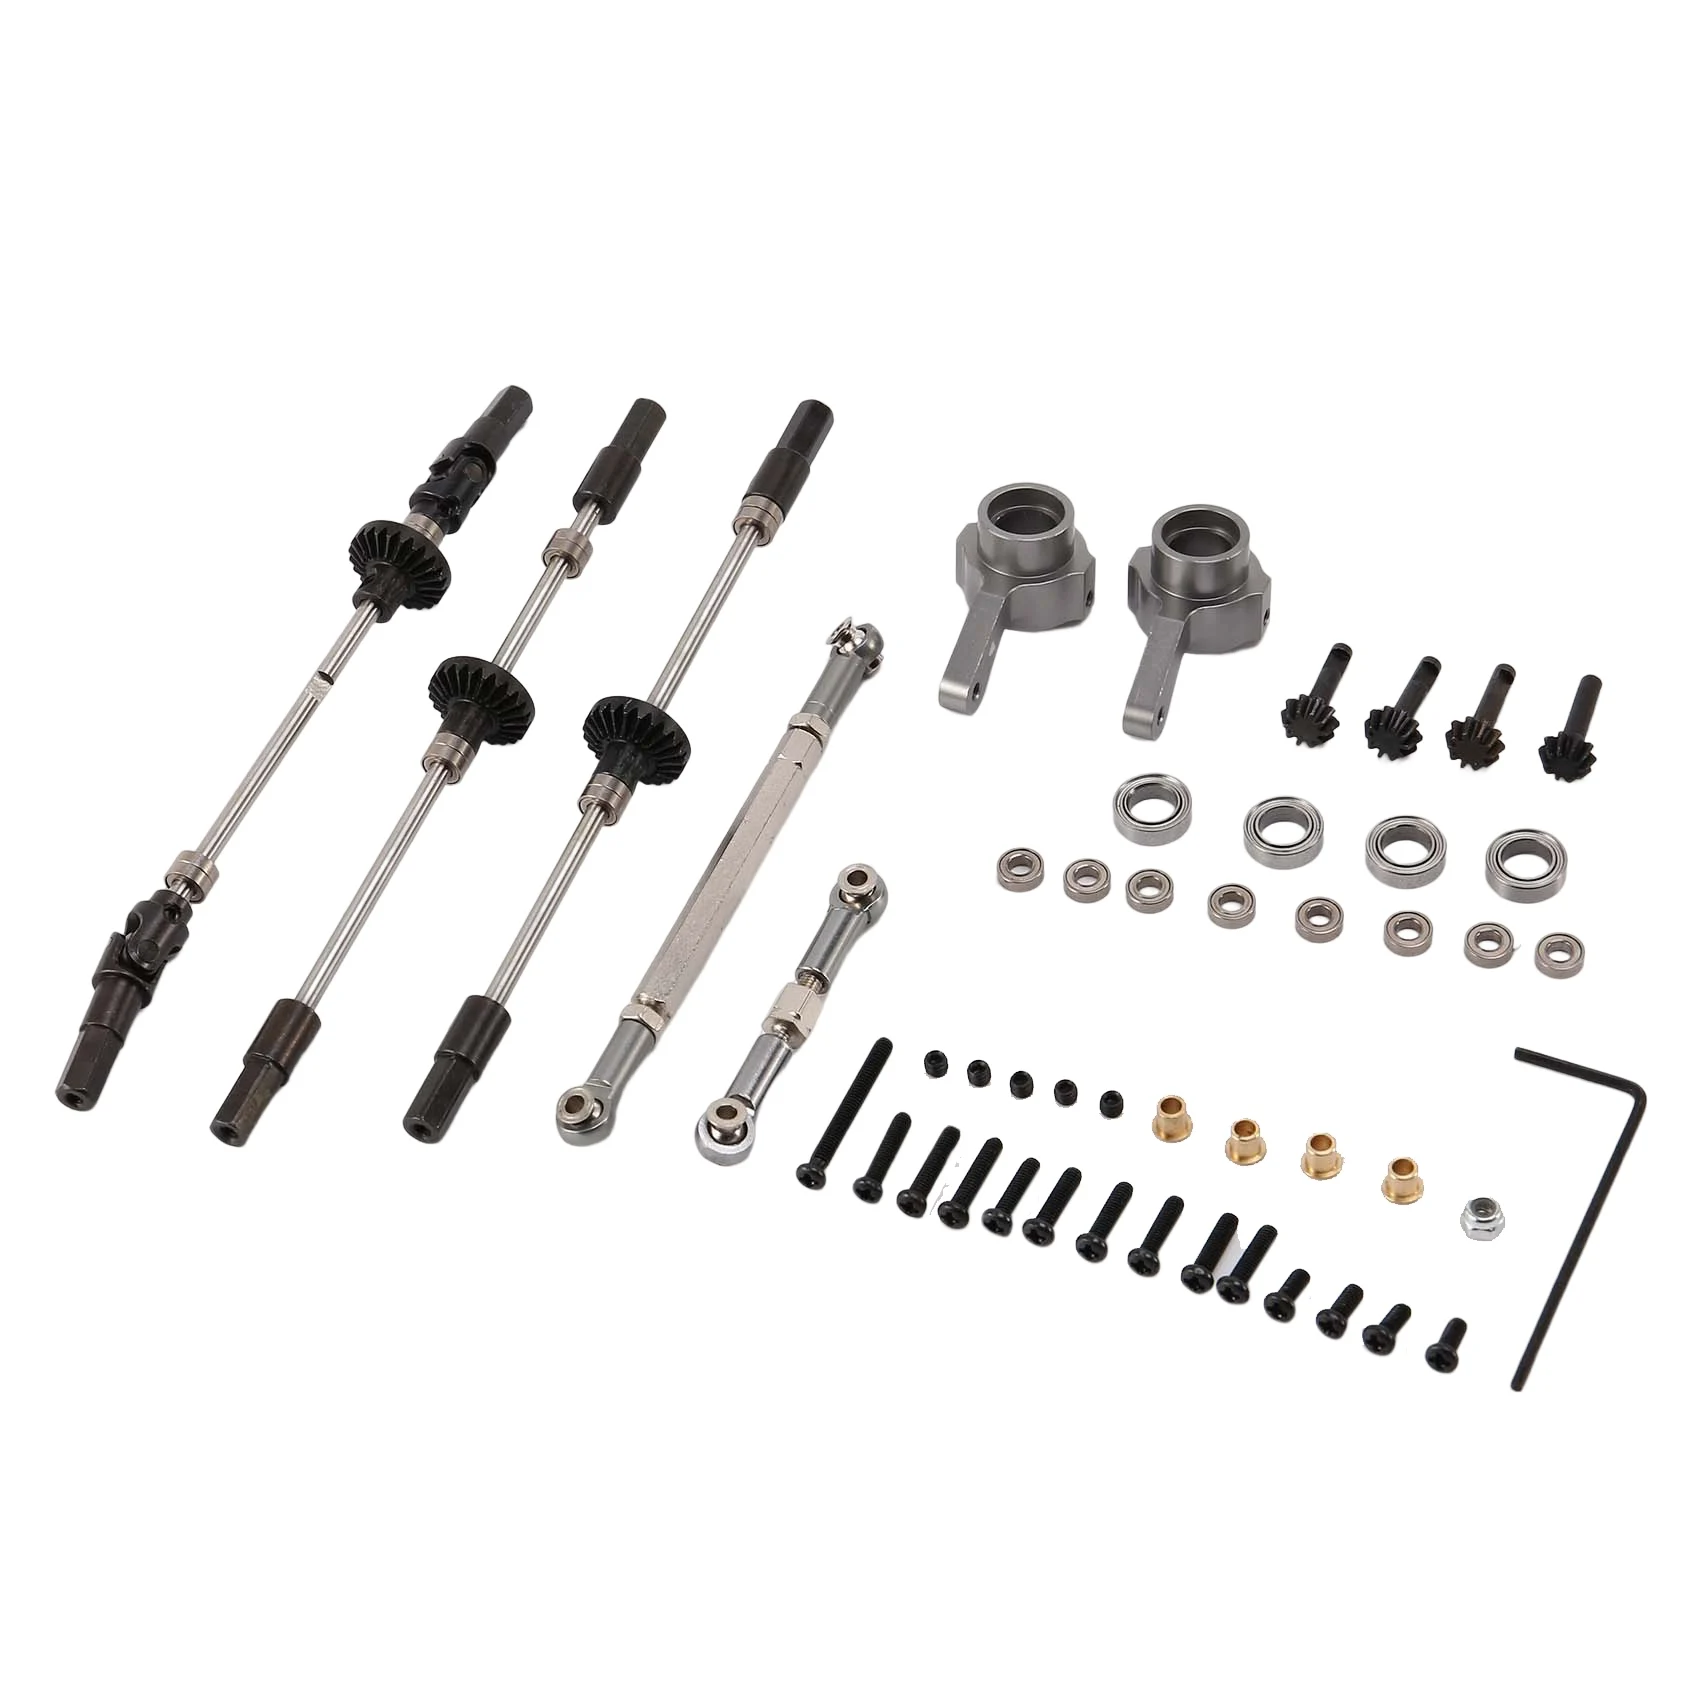 

Upgrade Steel Gear Bridge Axle Gears for WPL B14 B24 C14 C24 C34 C44 B16 B36 JJRC Q60 1/16 RC Car Spare Parts,6X6